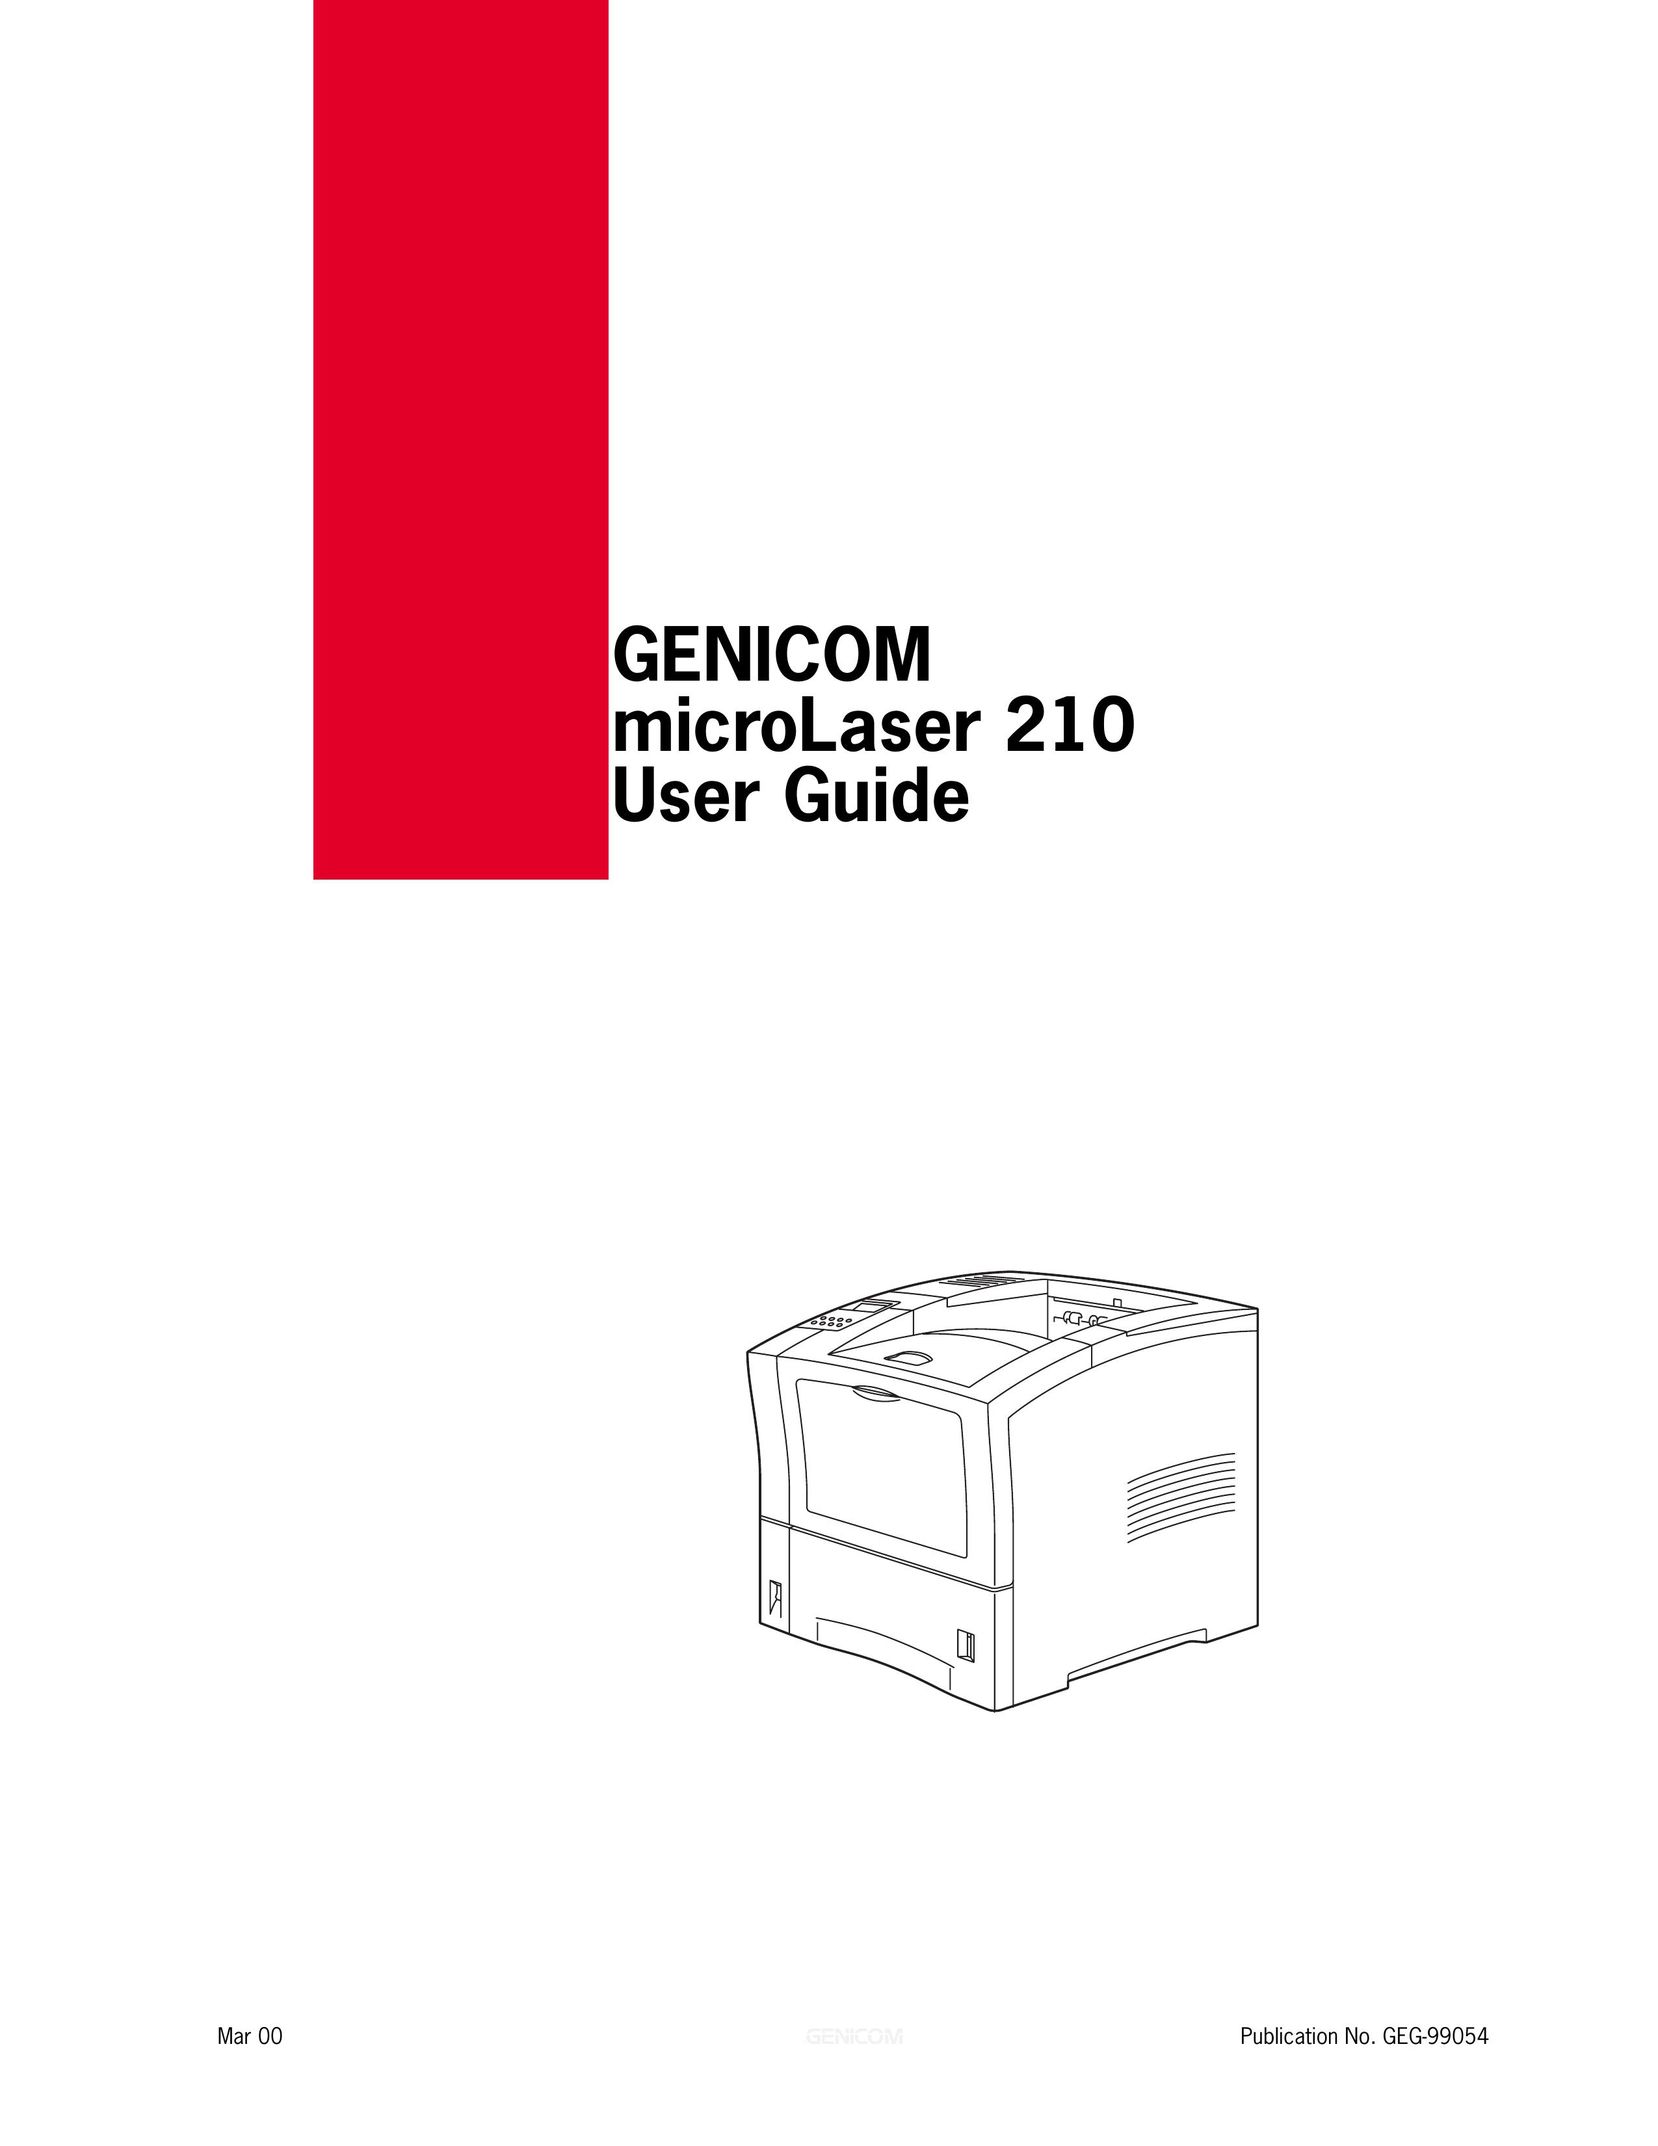 Genicom microLaser 210 Printer User Manual